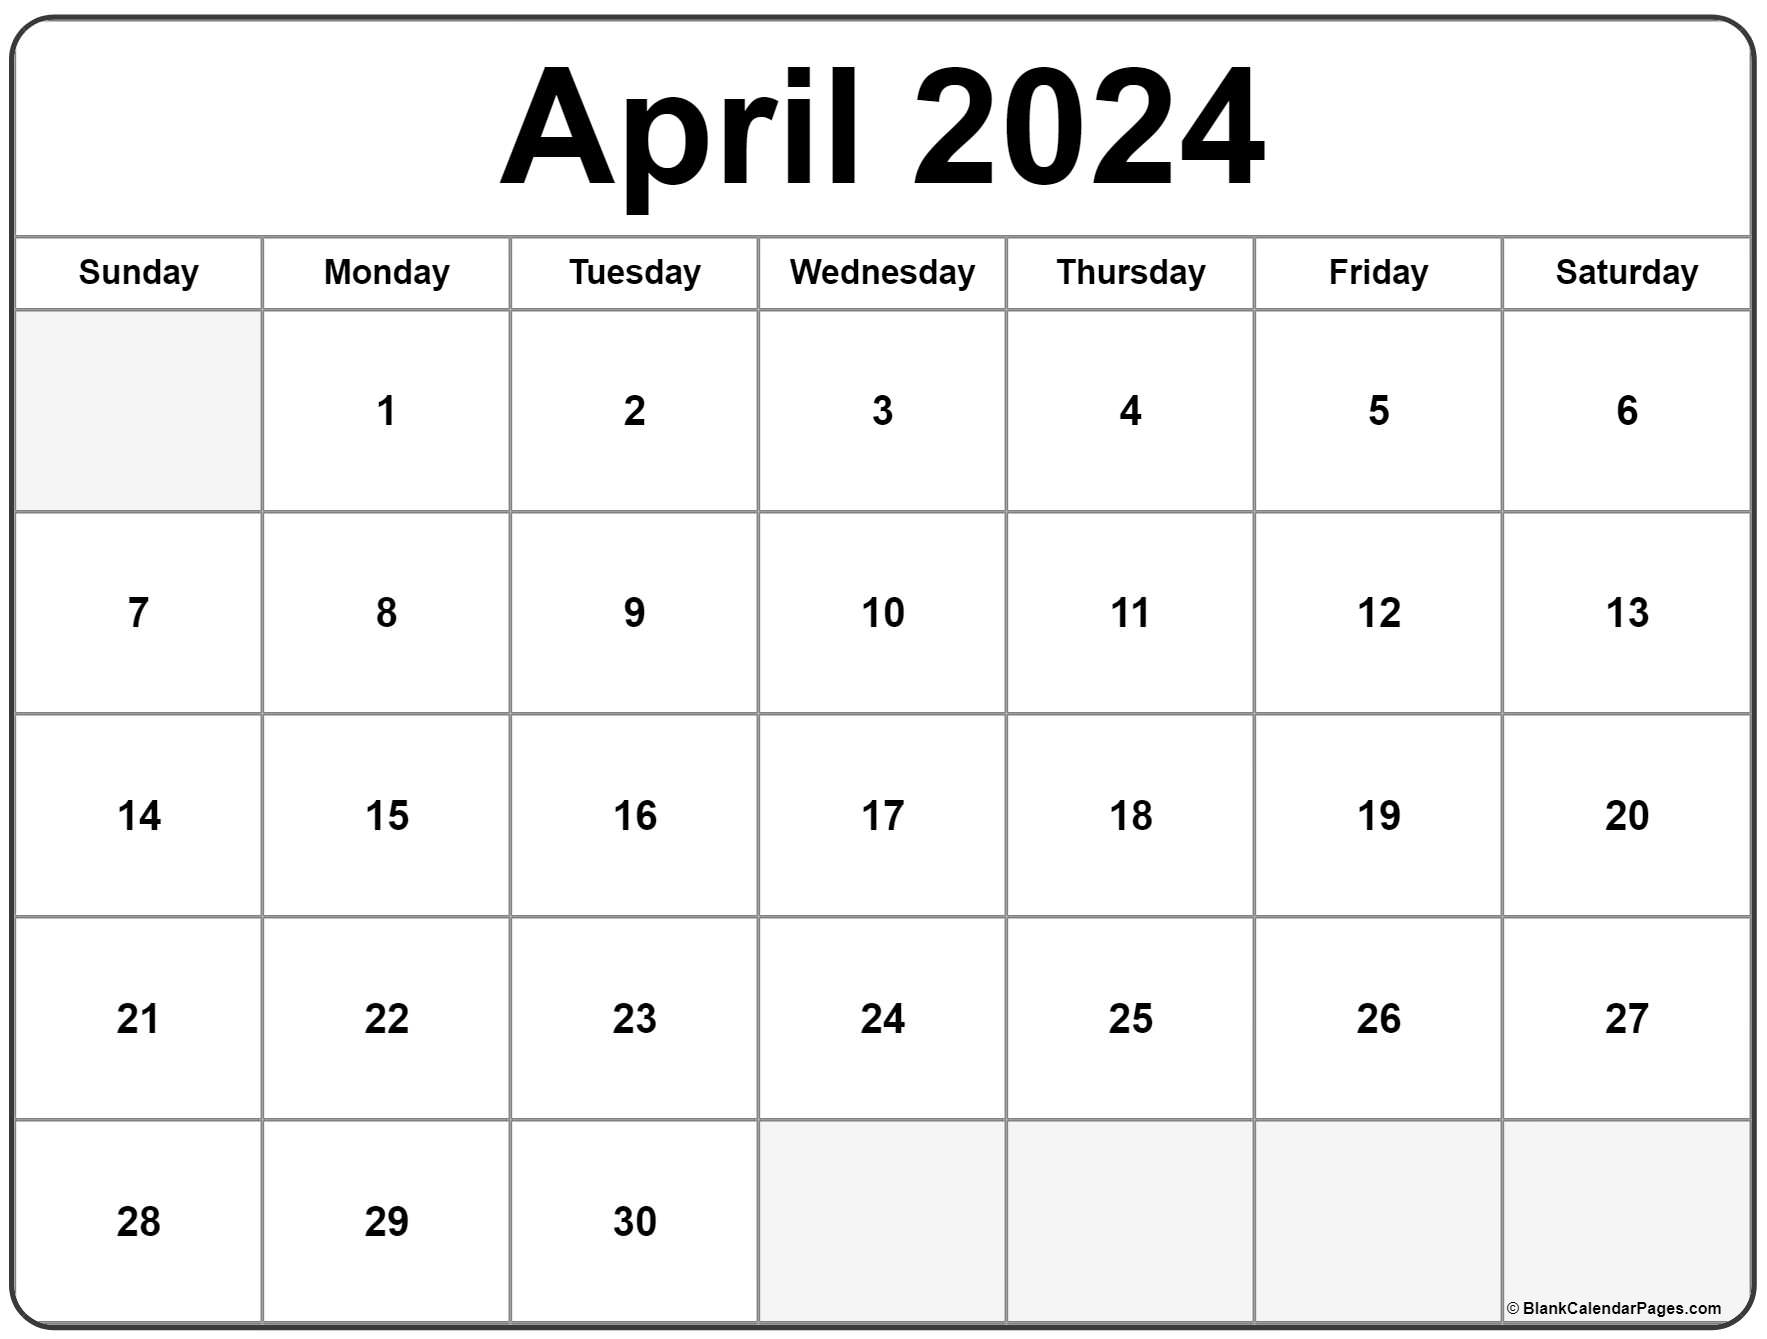 April 2024 Calendar Printable Free Notre Dame Football Schedule 2024 - Free Printable April 2024 Calendar Page